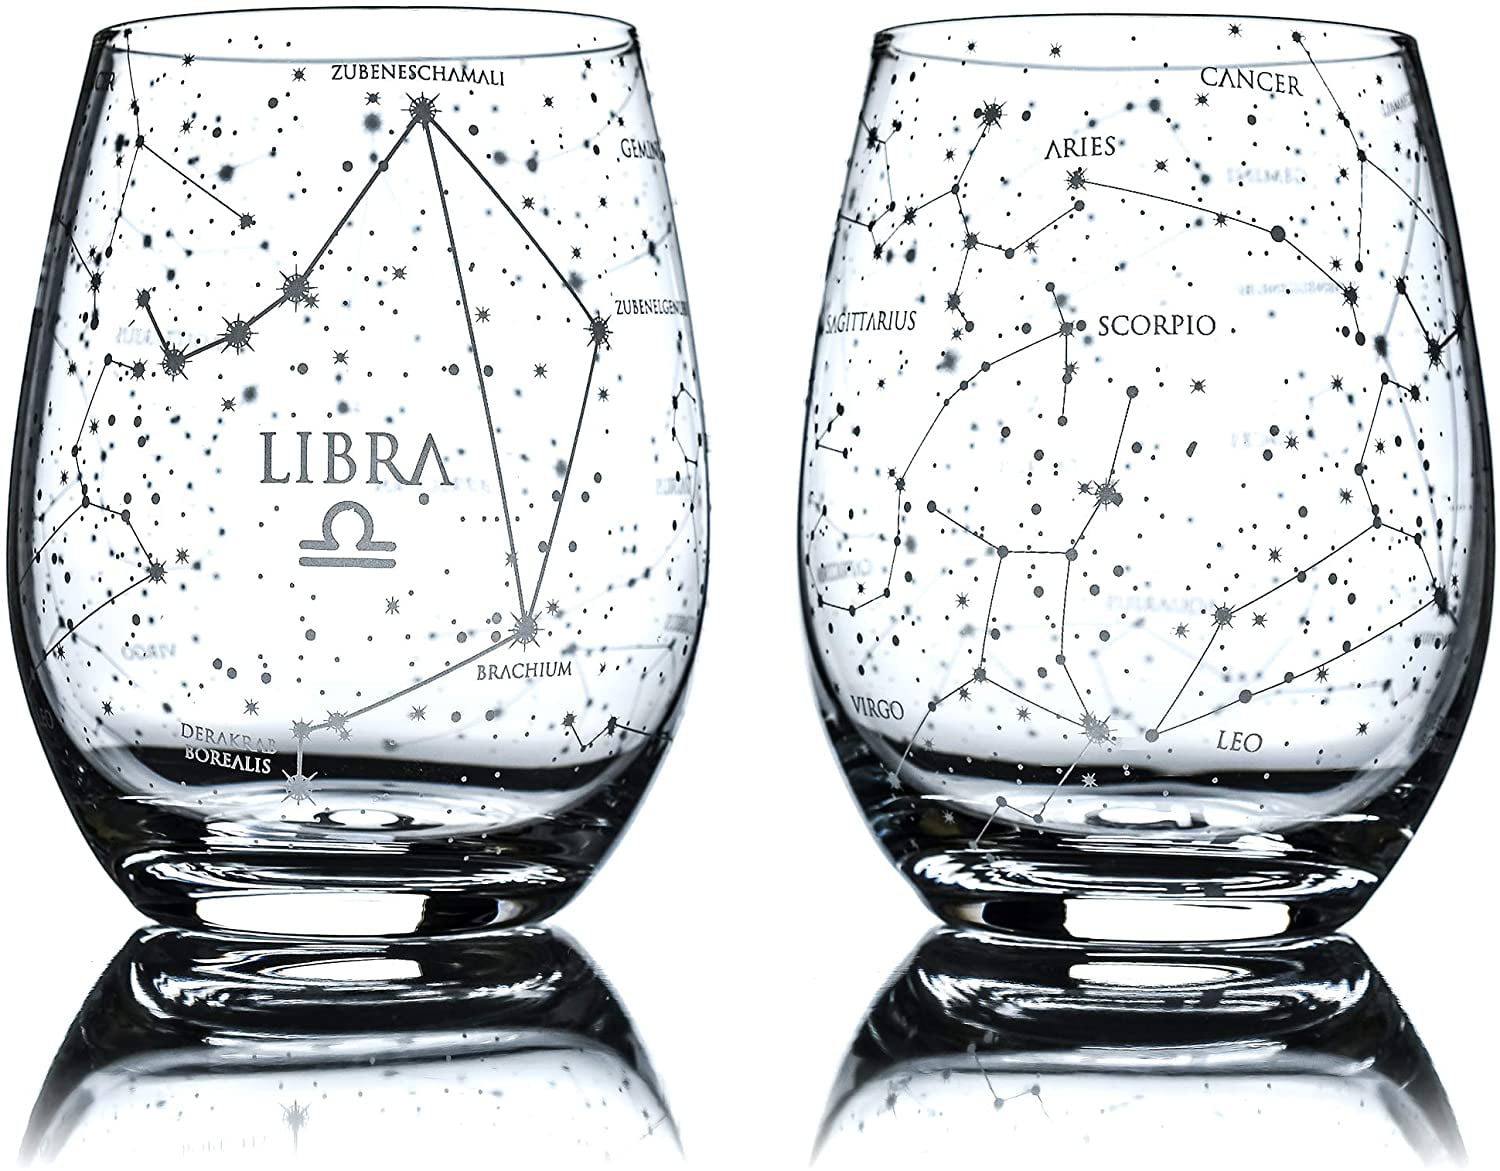 Zodiac Libra Set - Astrology Sign Glassware Hand Etched 15 oz Greenline Goods Libra Stemless Wine Glasses Set of 2 